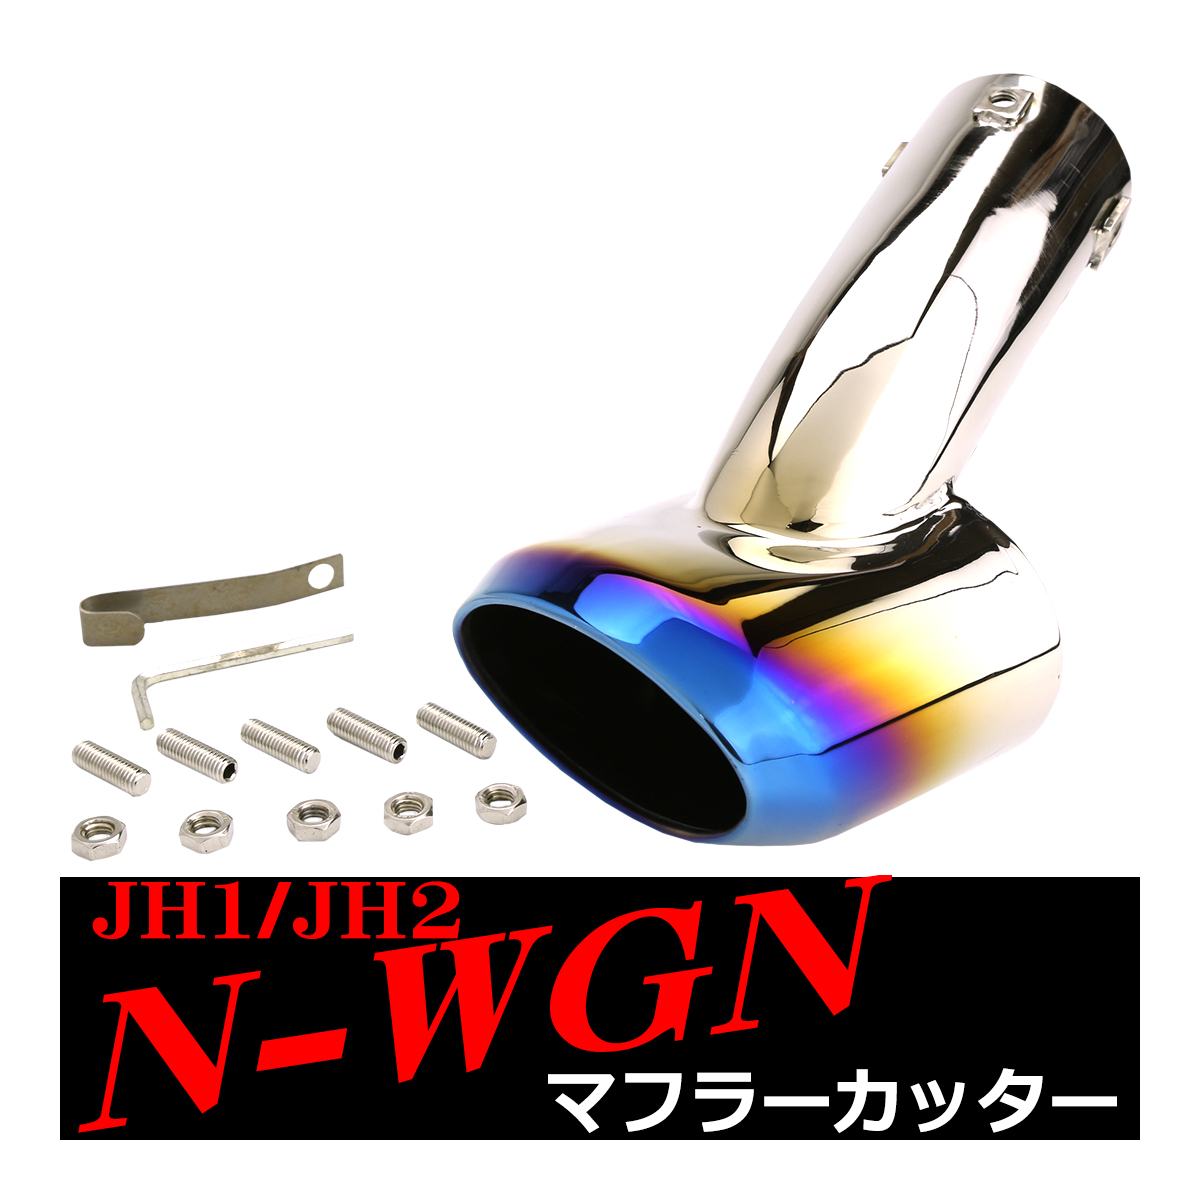 JH1/JH2 N-WGN マフラーカッター Nワゴン チタン調 ステンレス オーバル形状タイプ SZ173